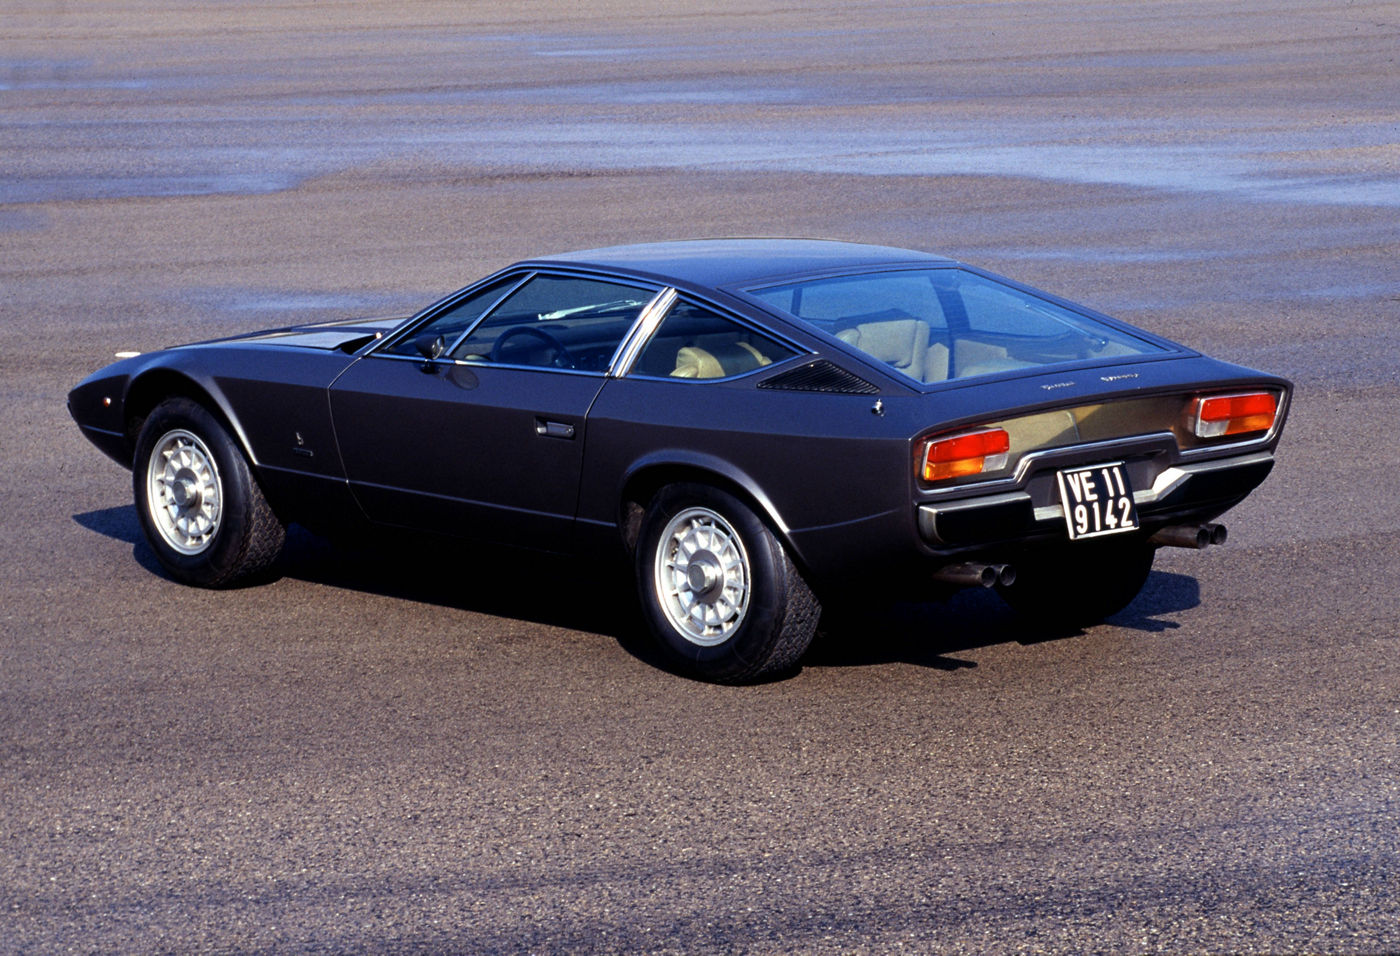 Maserati Classic - GranTurismo Khamsin - carrosserie grise - vue latérale postérieure